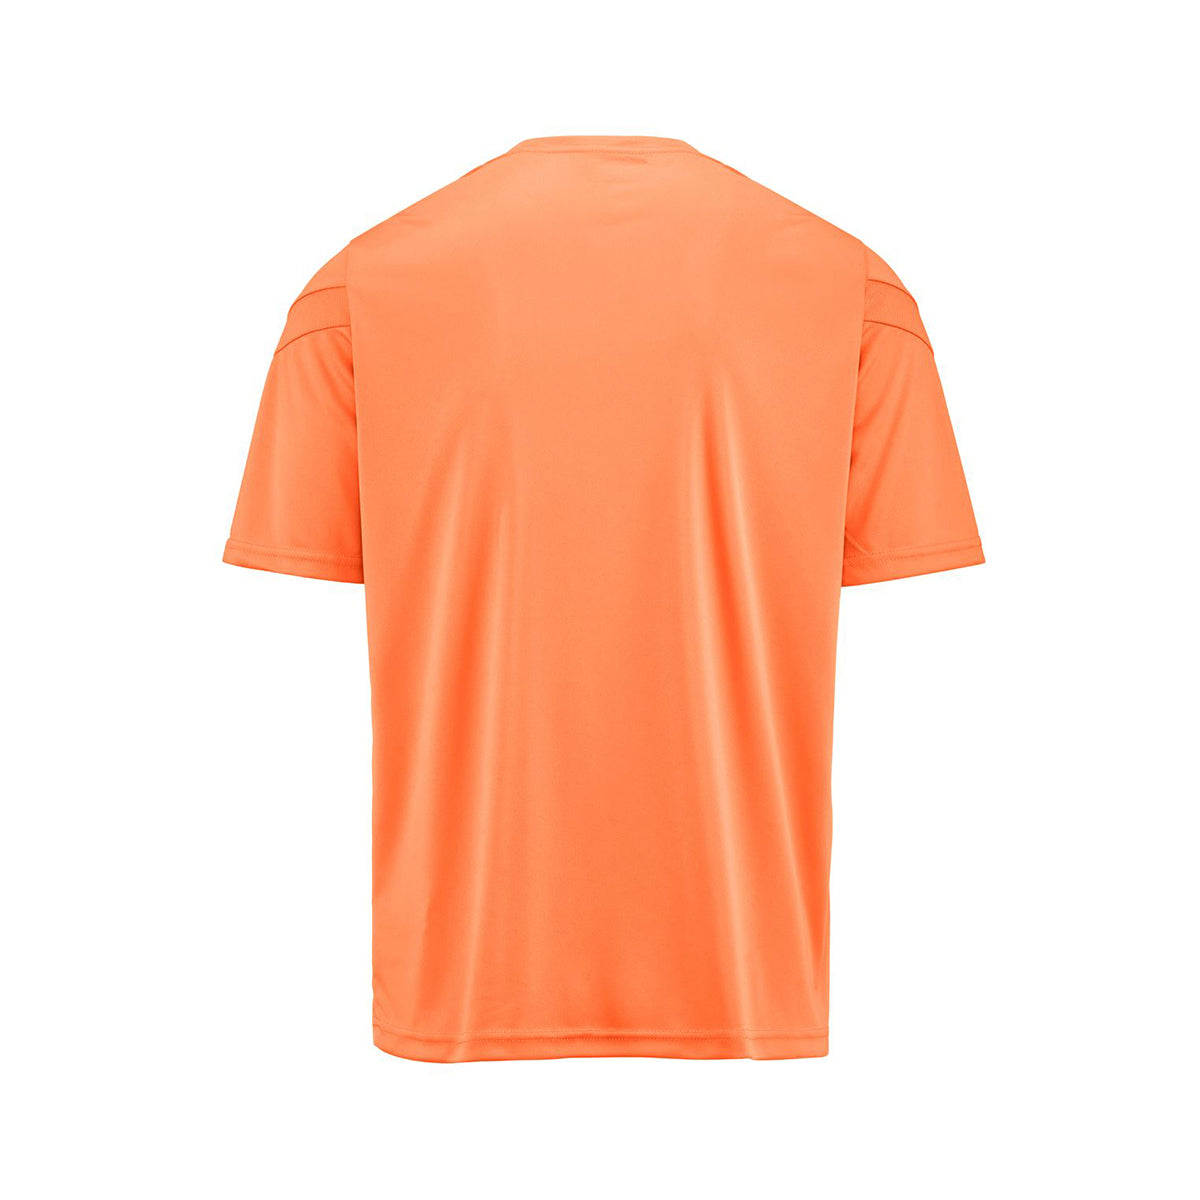 Camiseta de juego Dovo Naranja Niños - imagen 3